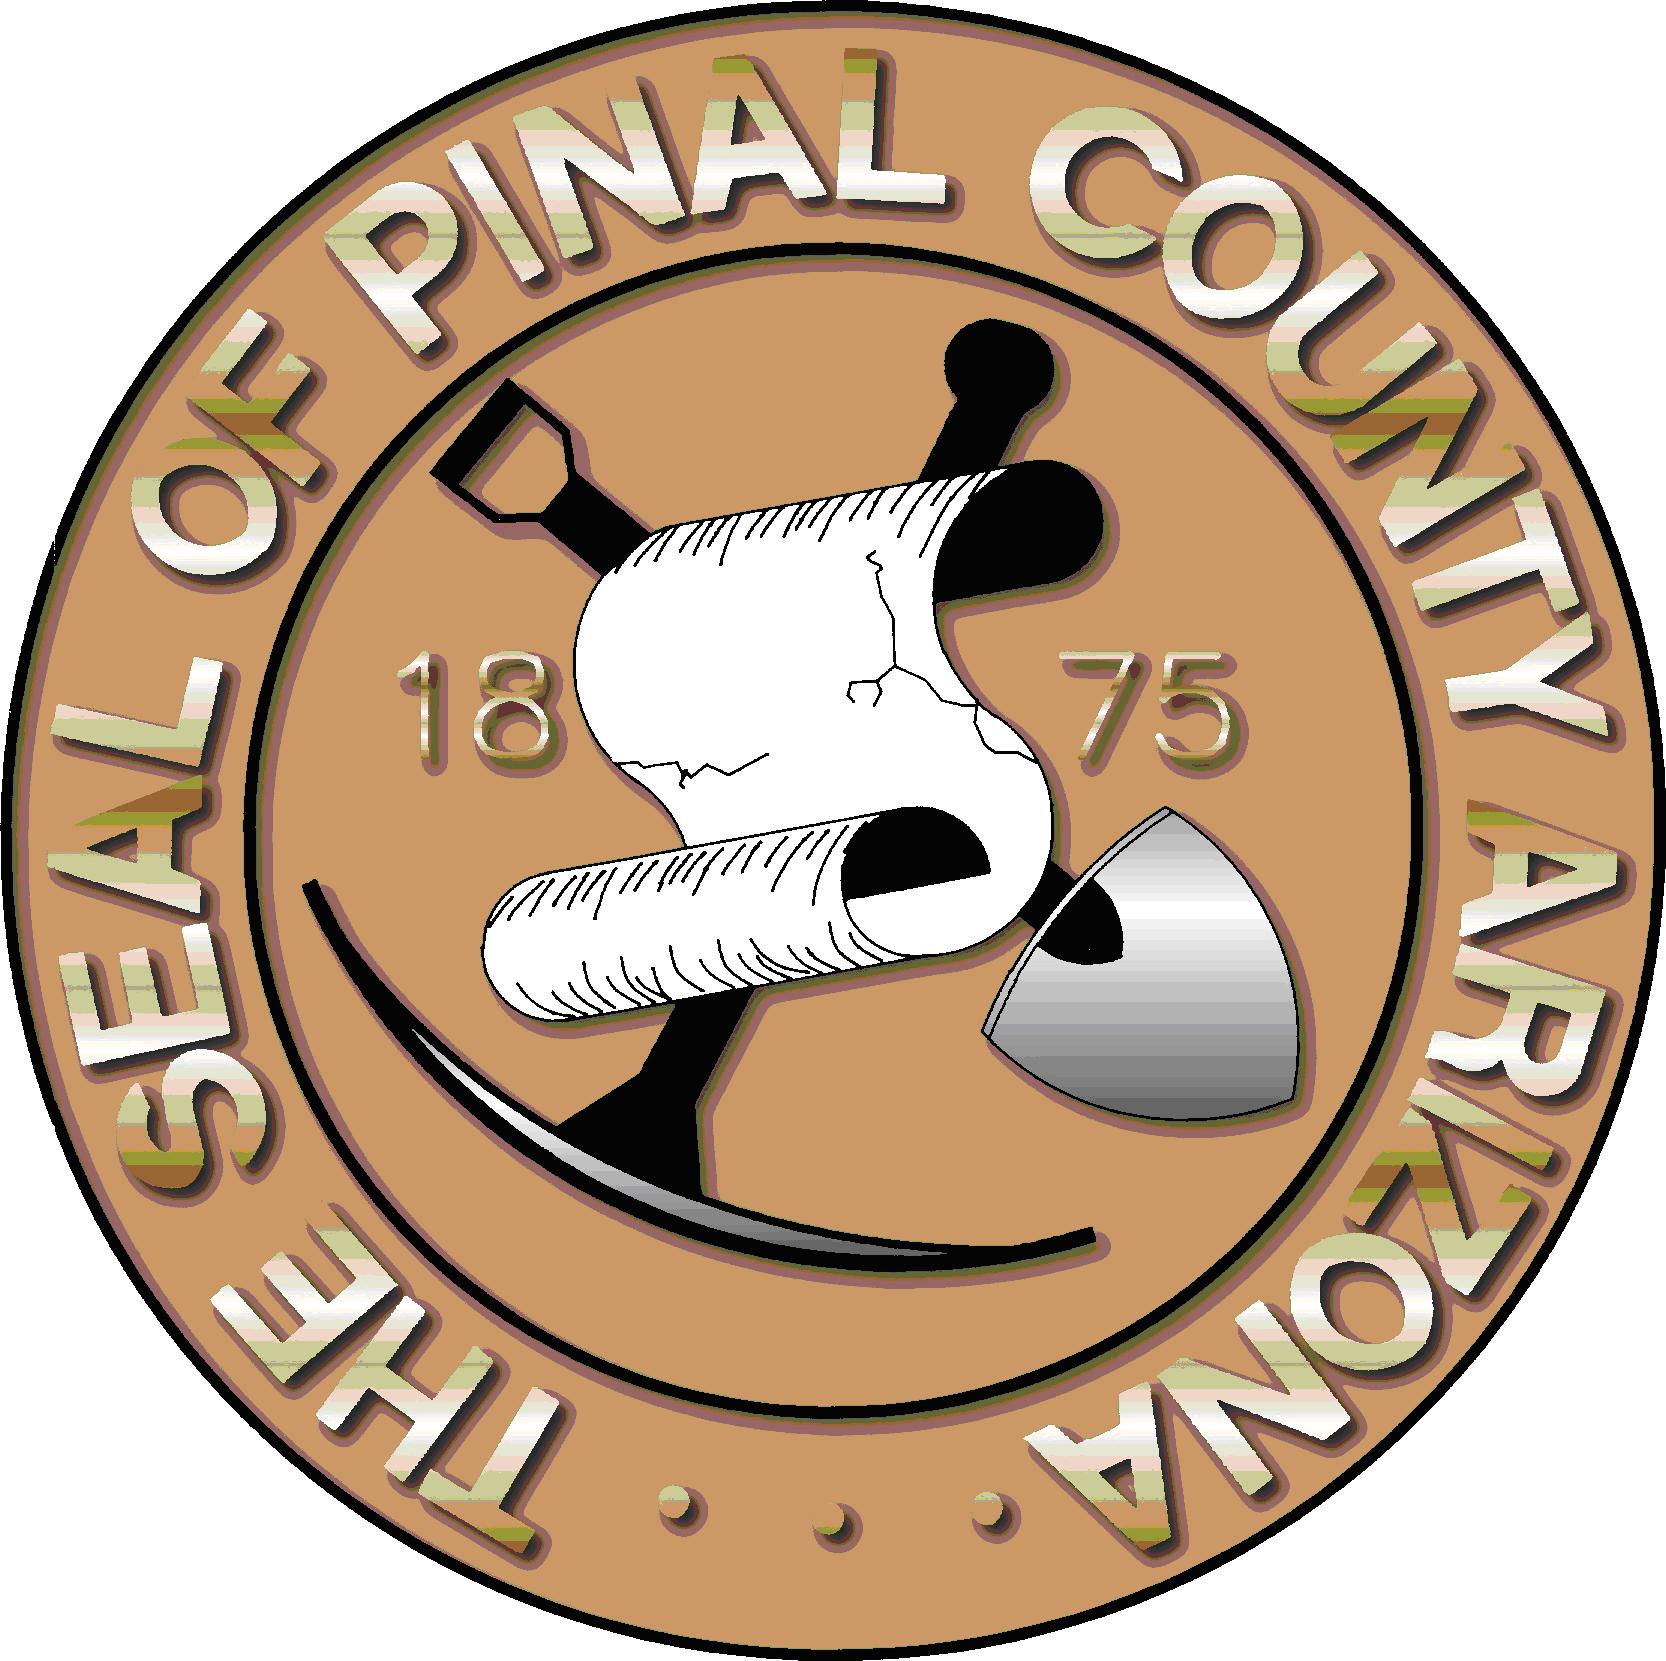 Pinal colorseal | County Supervisors Association of Arizona